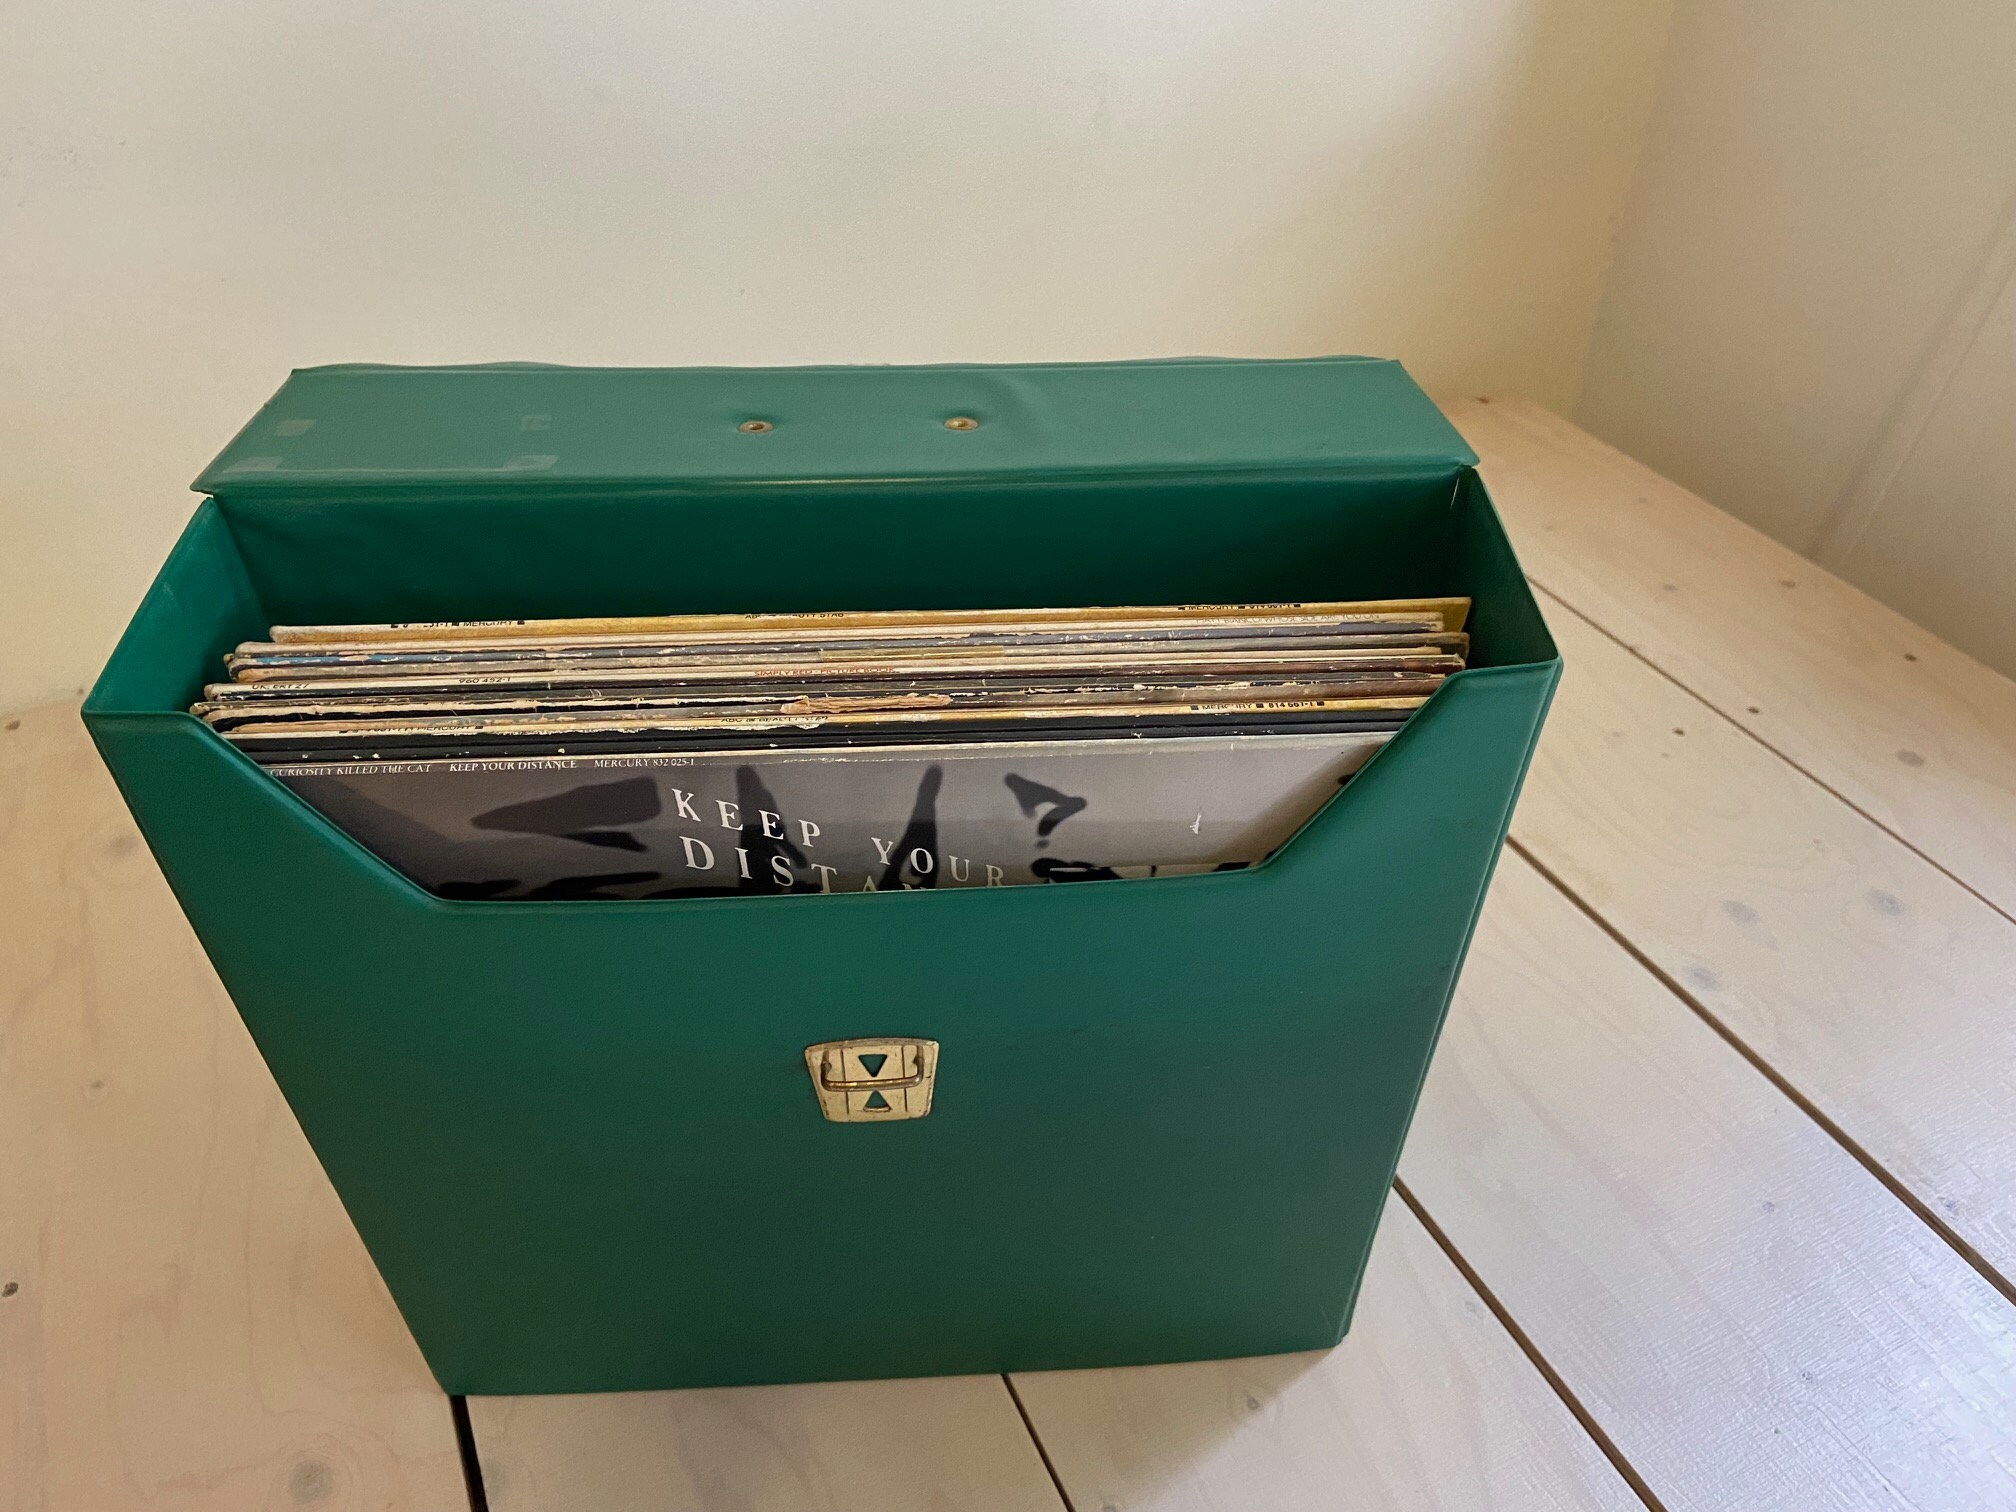 Vinyl LP Record Storage Chelle System Stackable Crates 